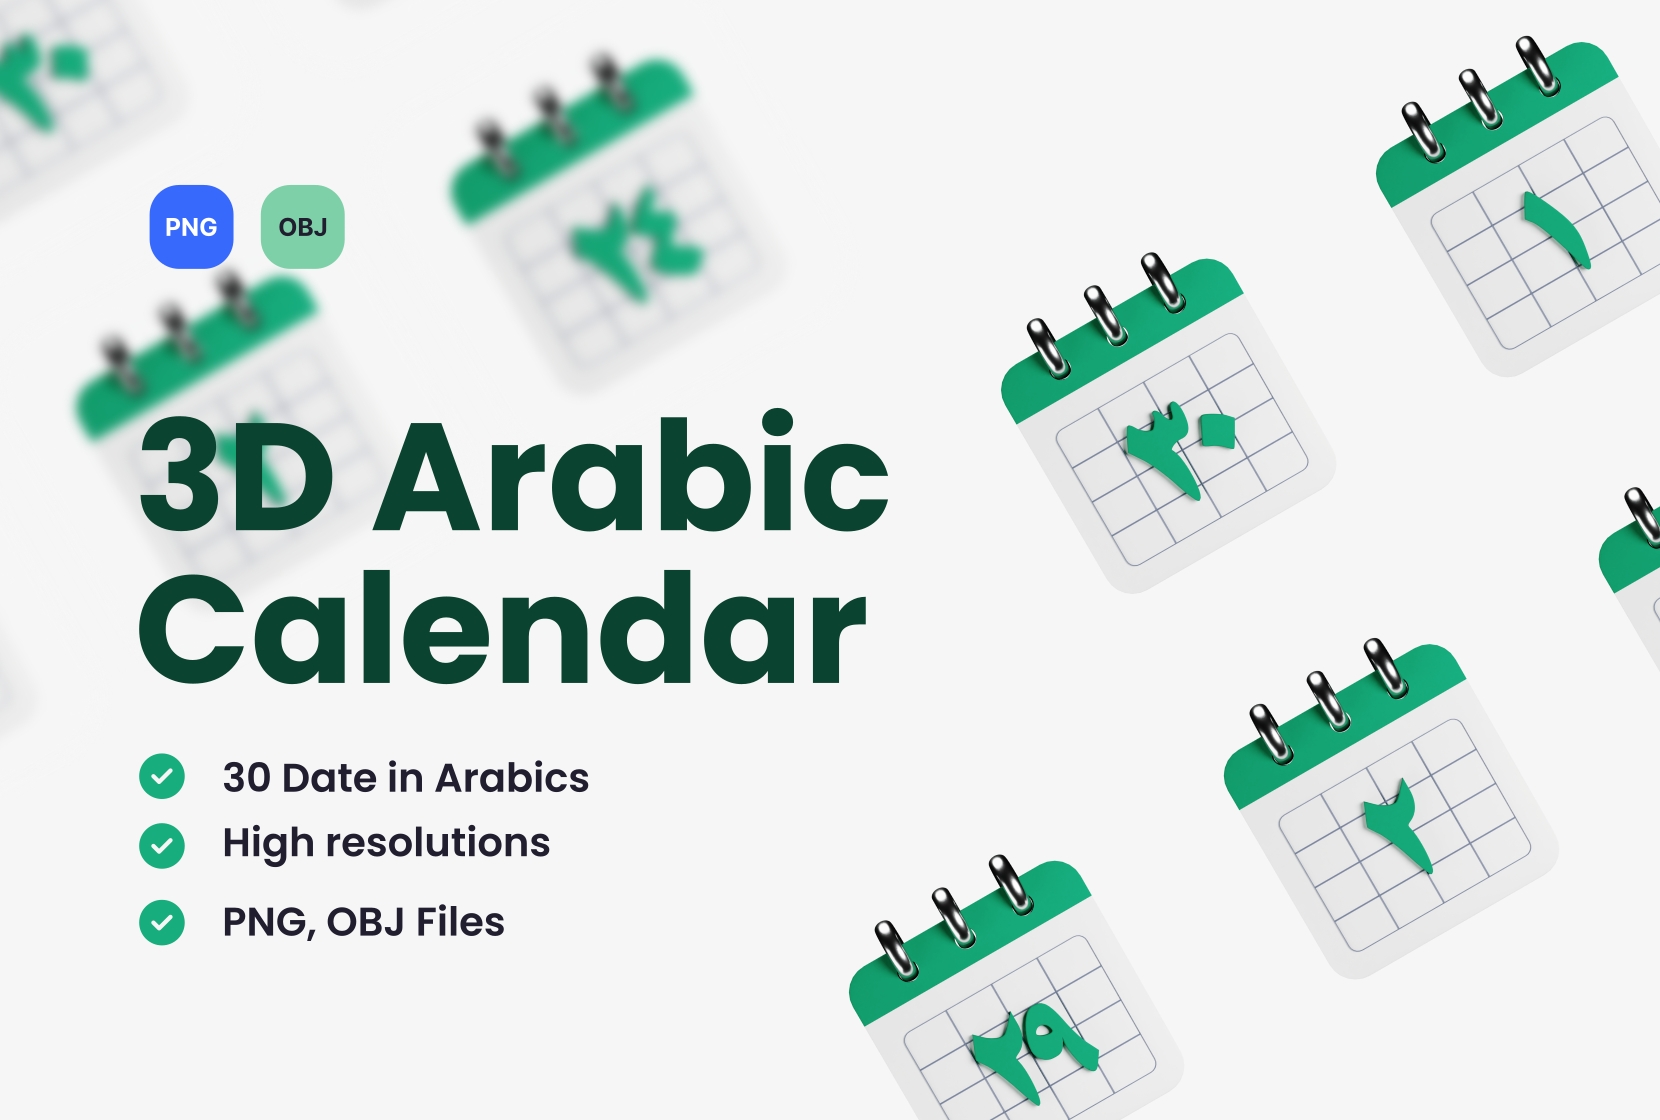 Premium Arabic Calendar 3D Illustration pack from Culture & Religion 3D